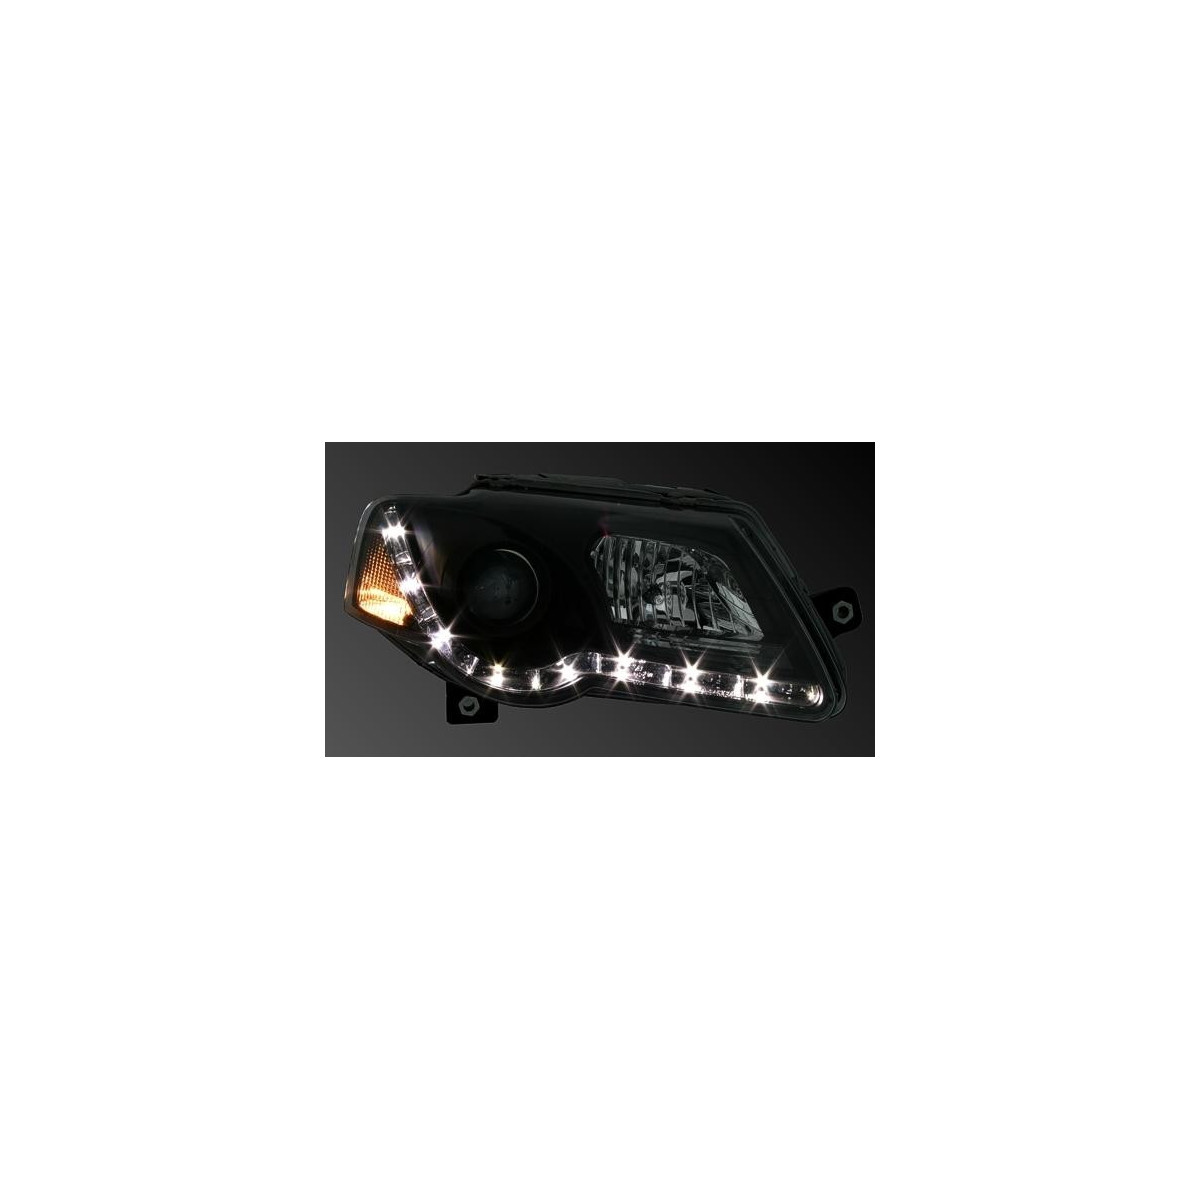 LAMPY DAYLINE VW PASSAT 3C 03/05- CZARNE